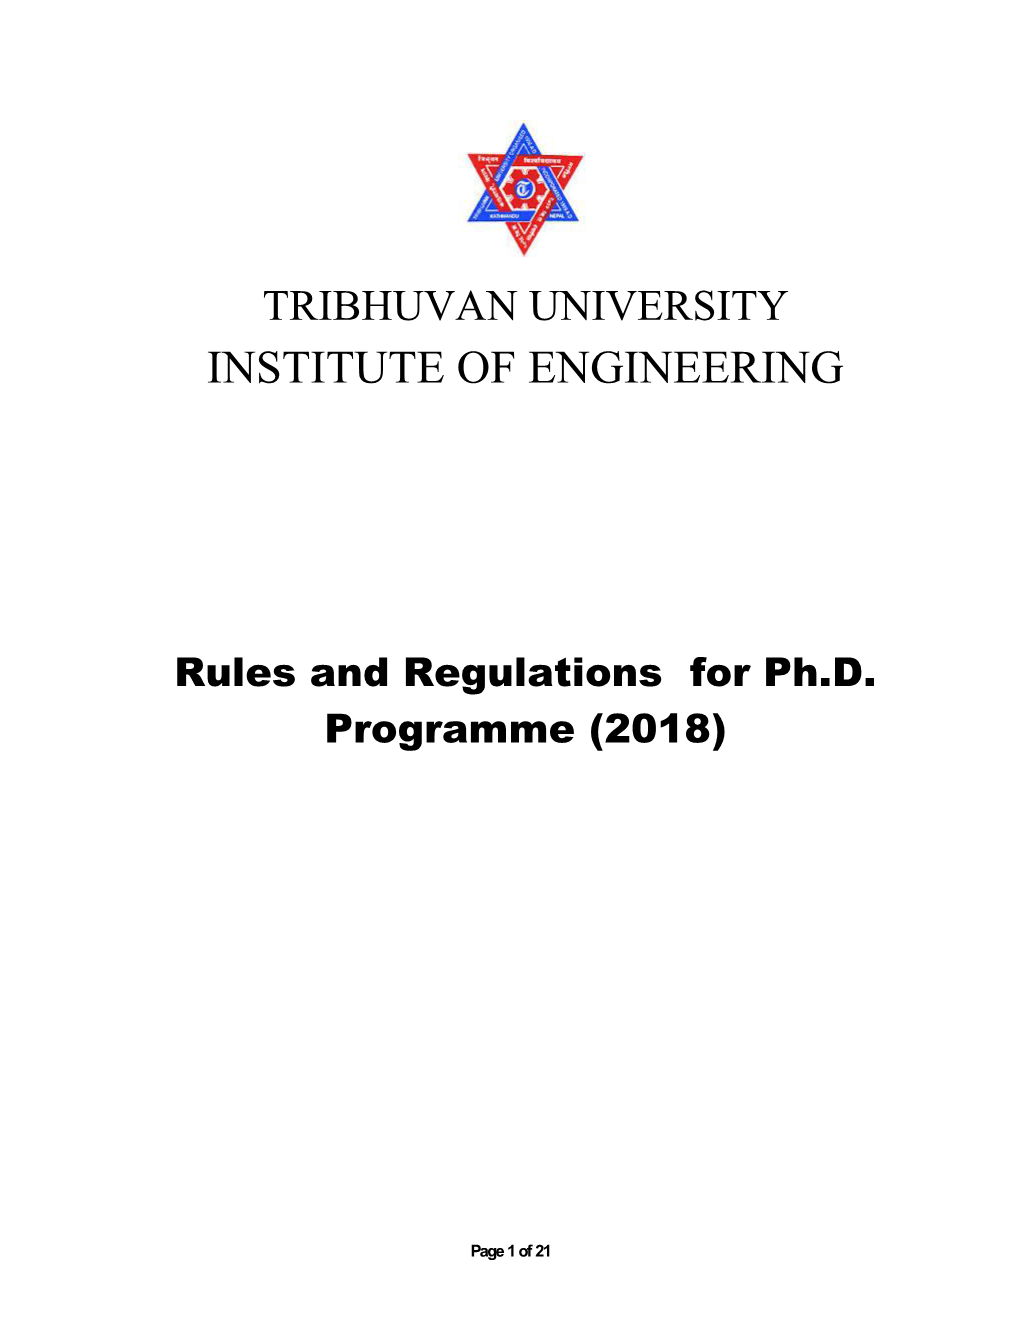 Phd-Rules-And-Regula